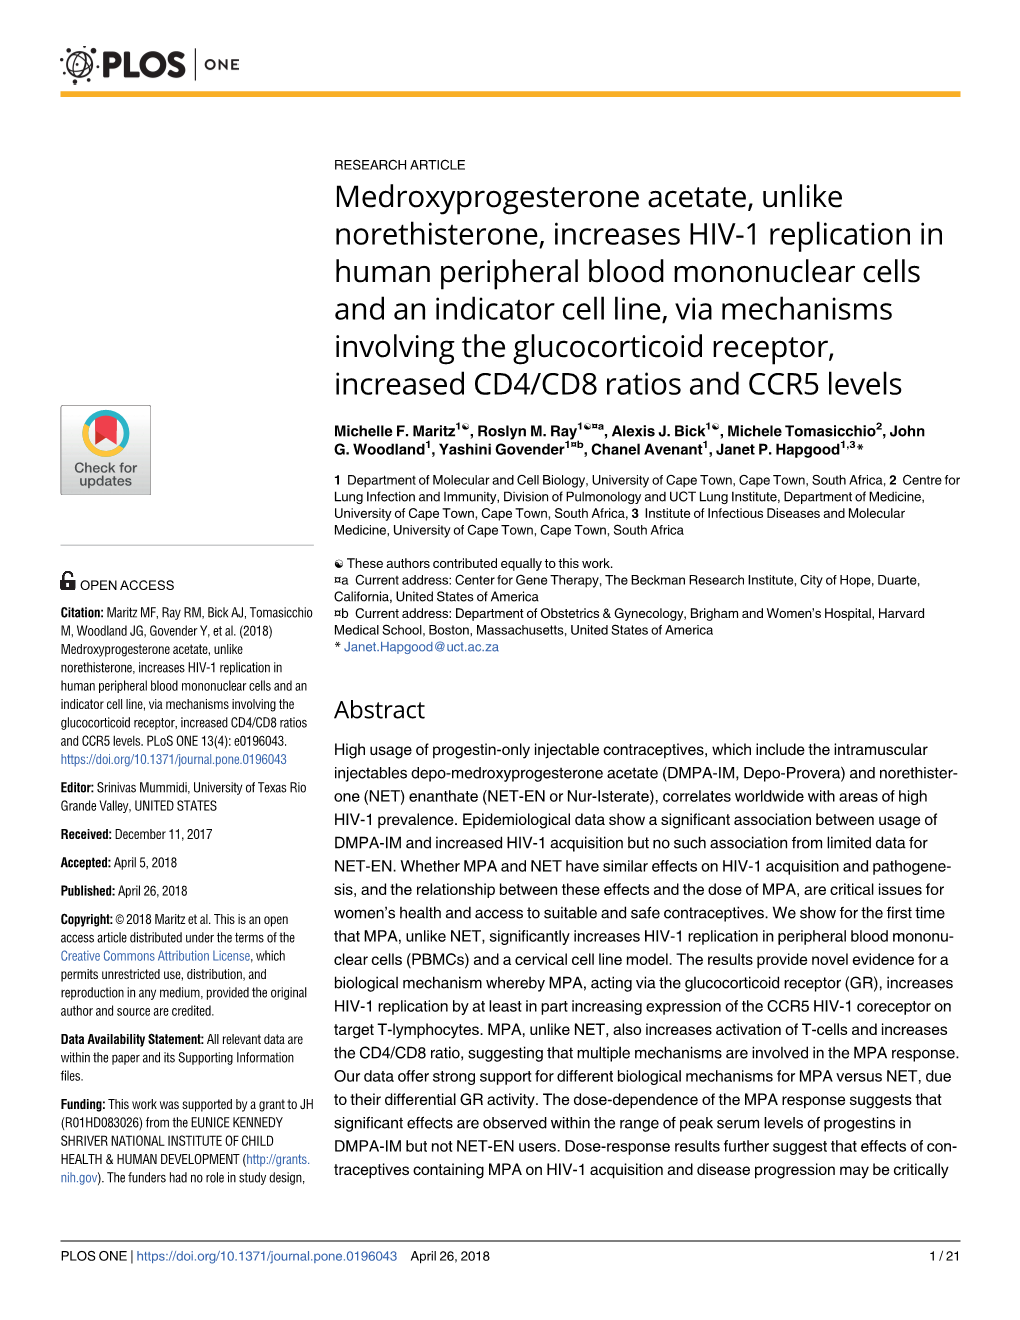 Medroxyprogesterone Acetate, Unlike Norethisterone, Increases HIV-1